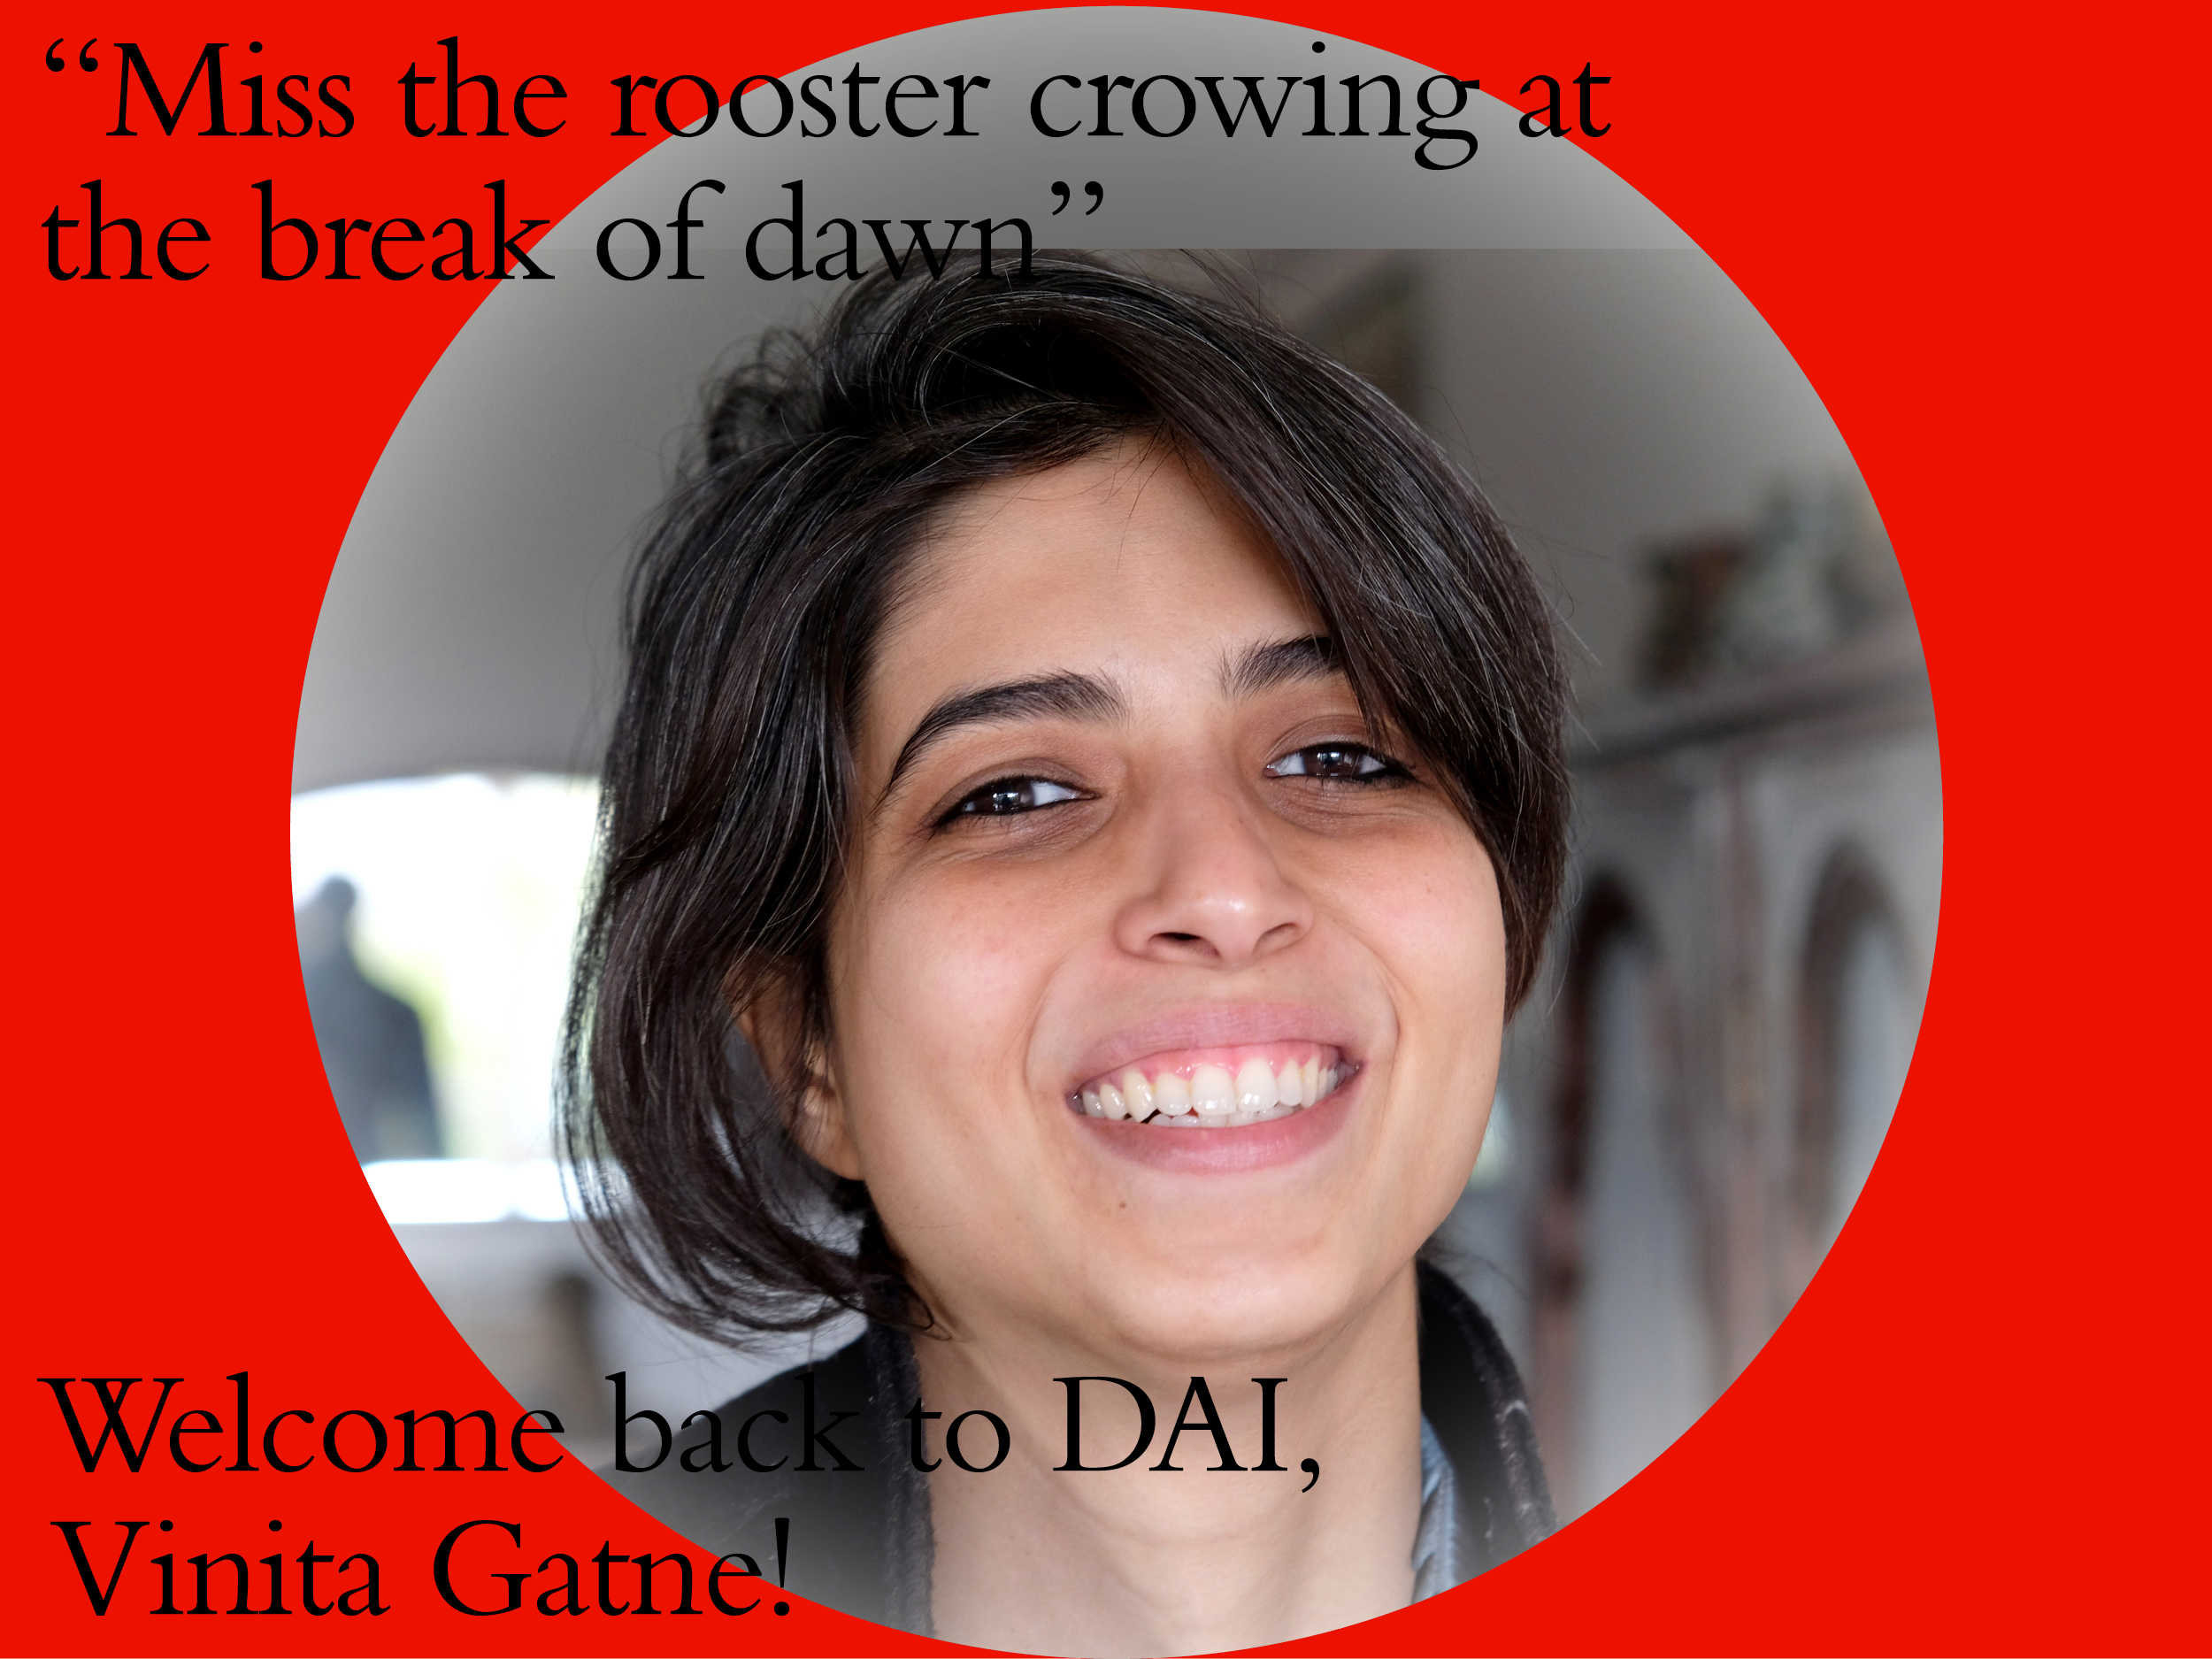 DAI welcomes back Vinita Gatne - Kitchen, 27th June